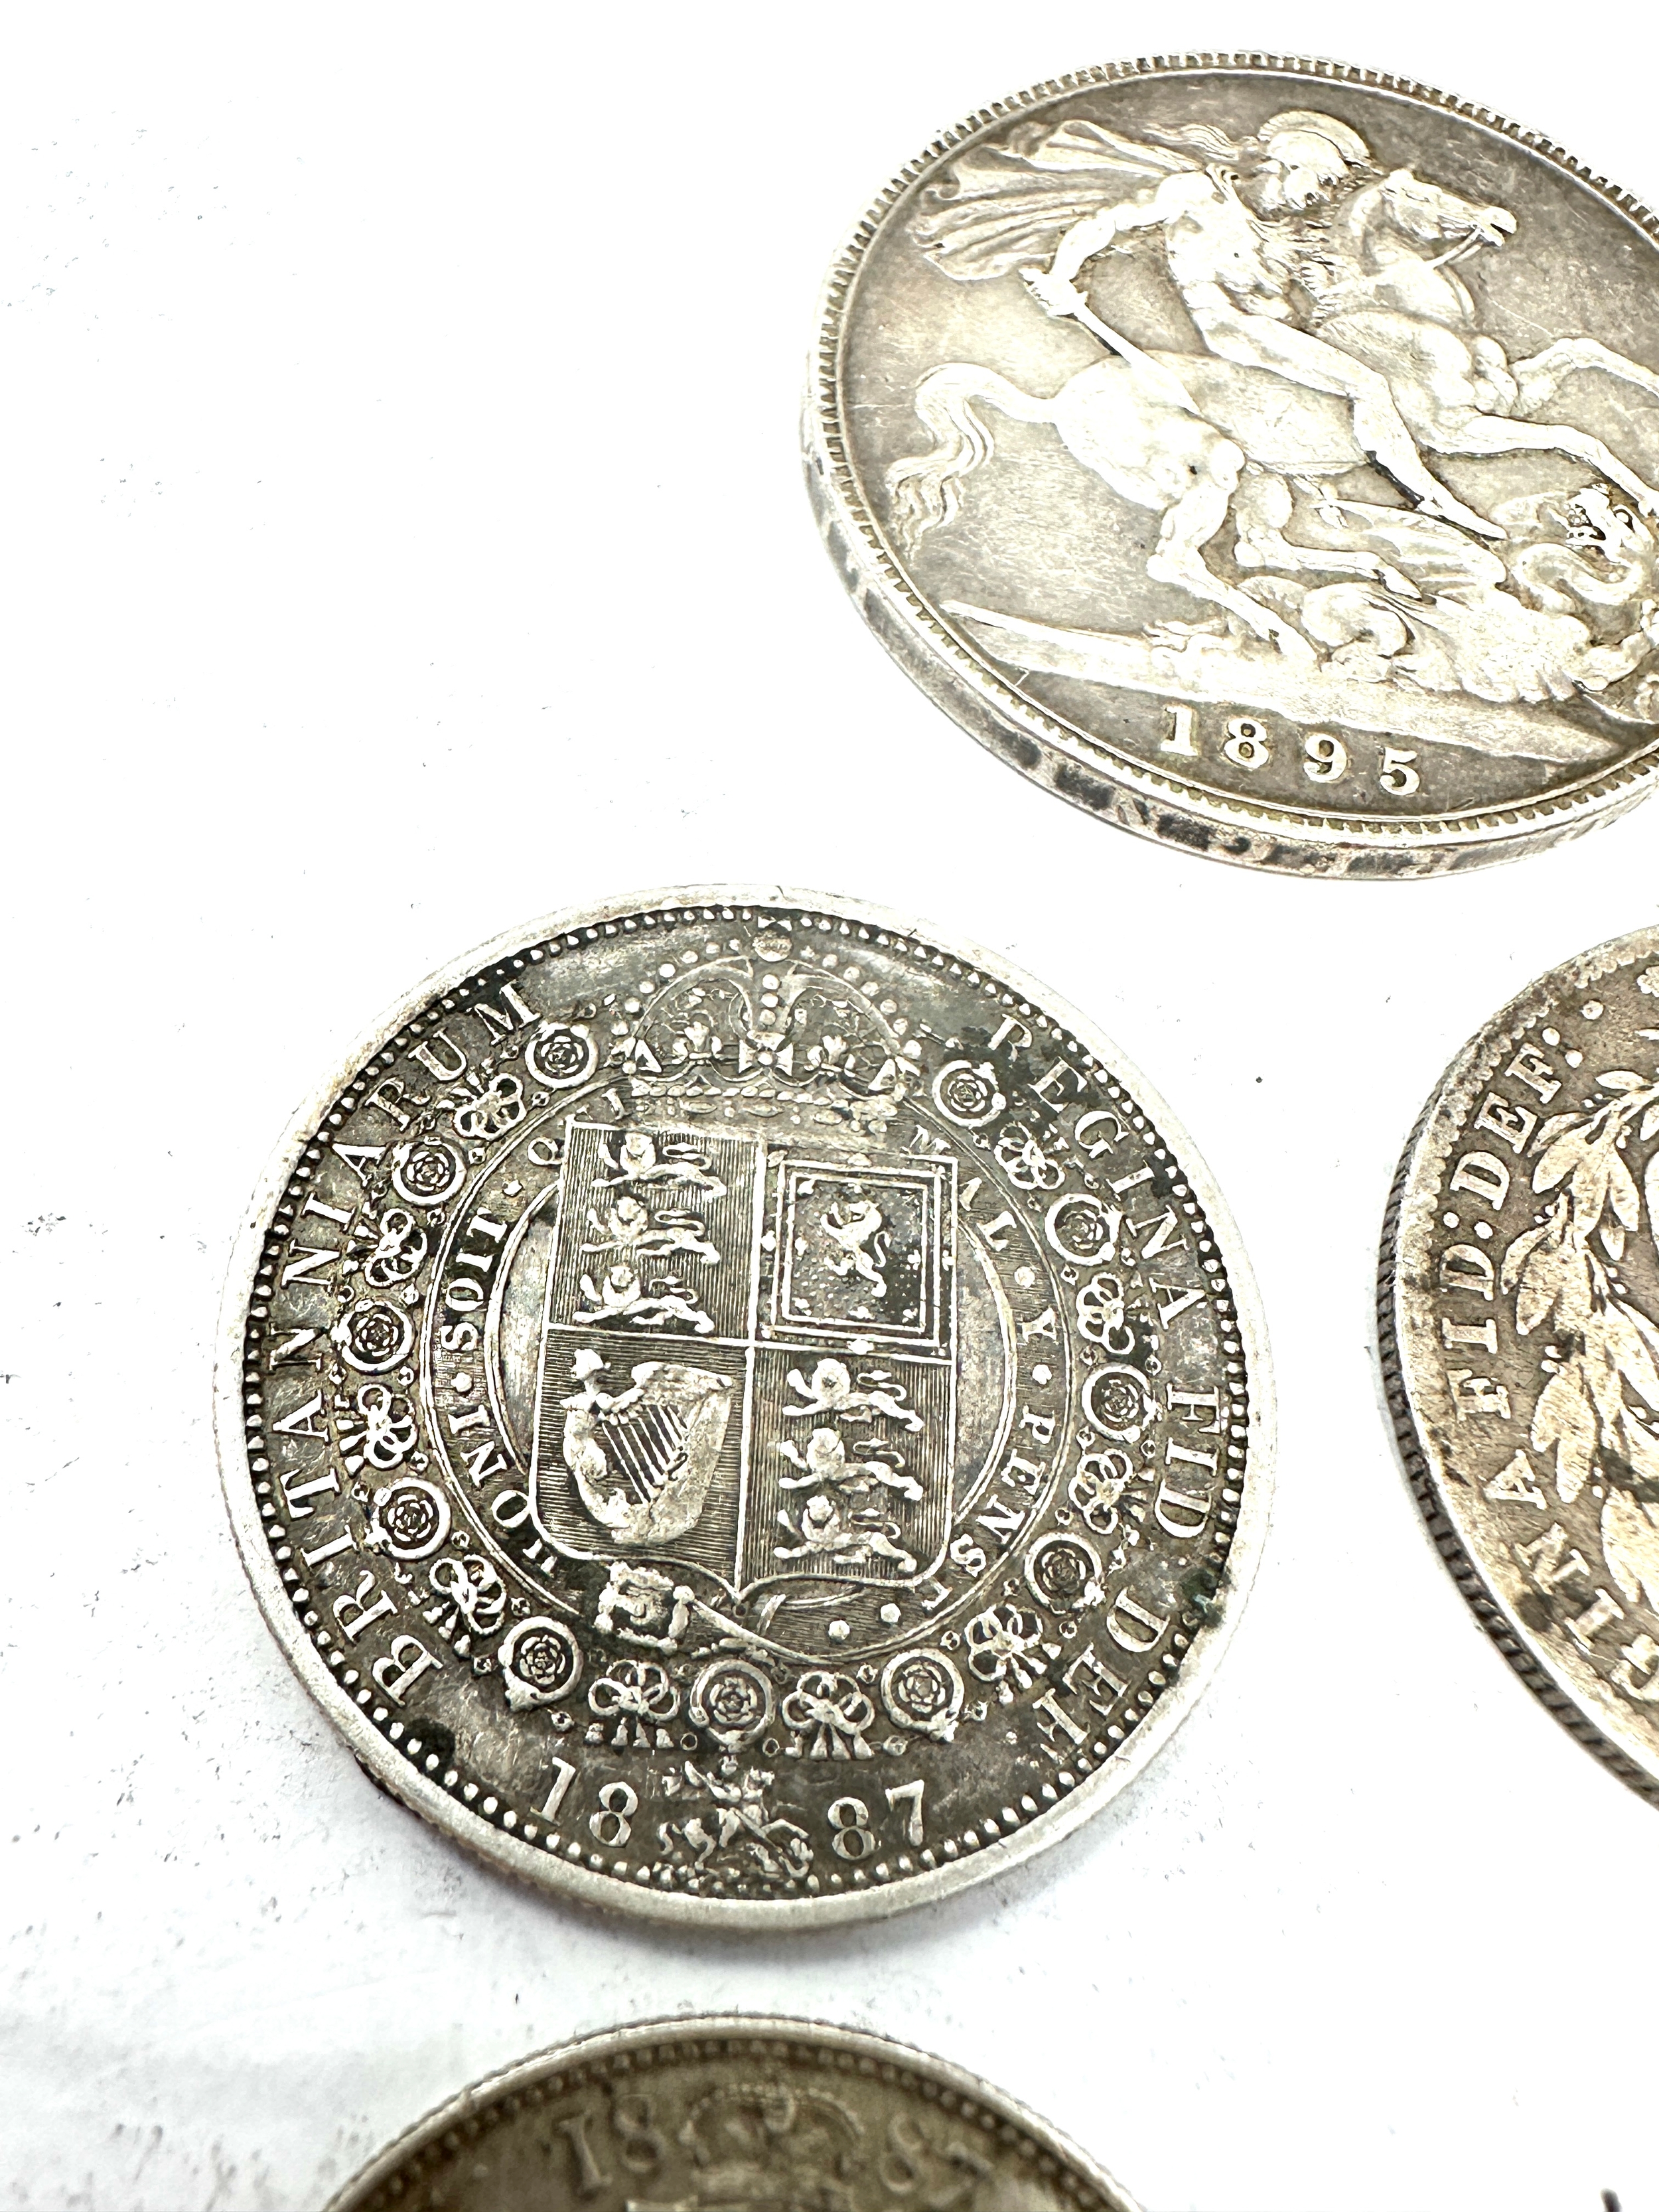 Victorian silver coins inc crown half crowns & florins - Image 4 of 6